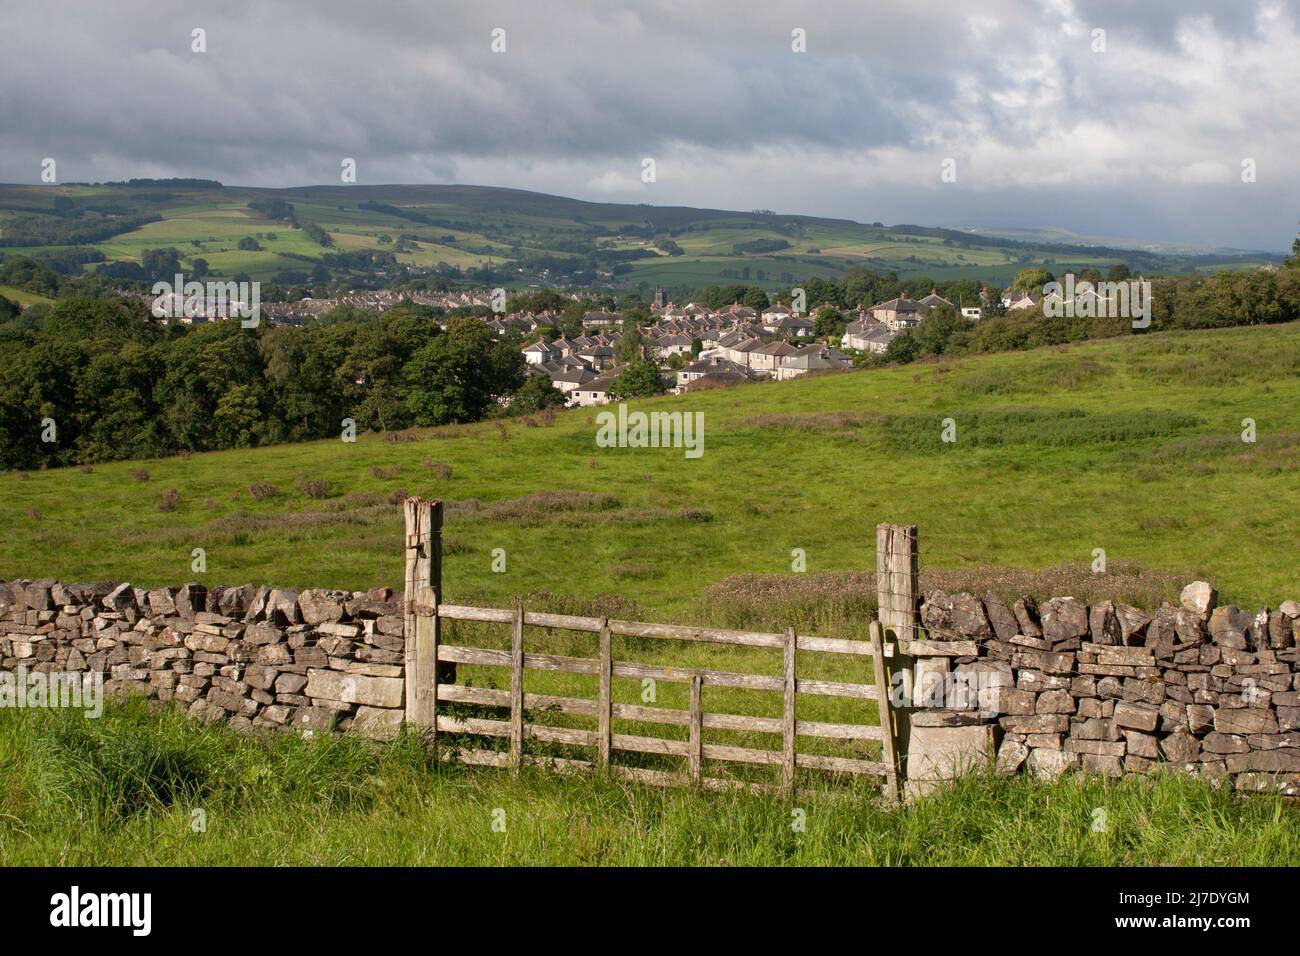 View looking towards Skipton, Yorkshire, England Stock Photo